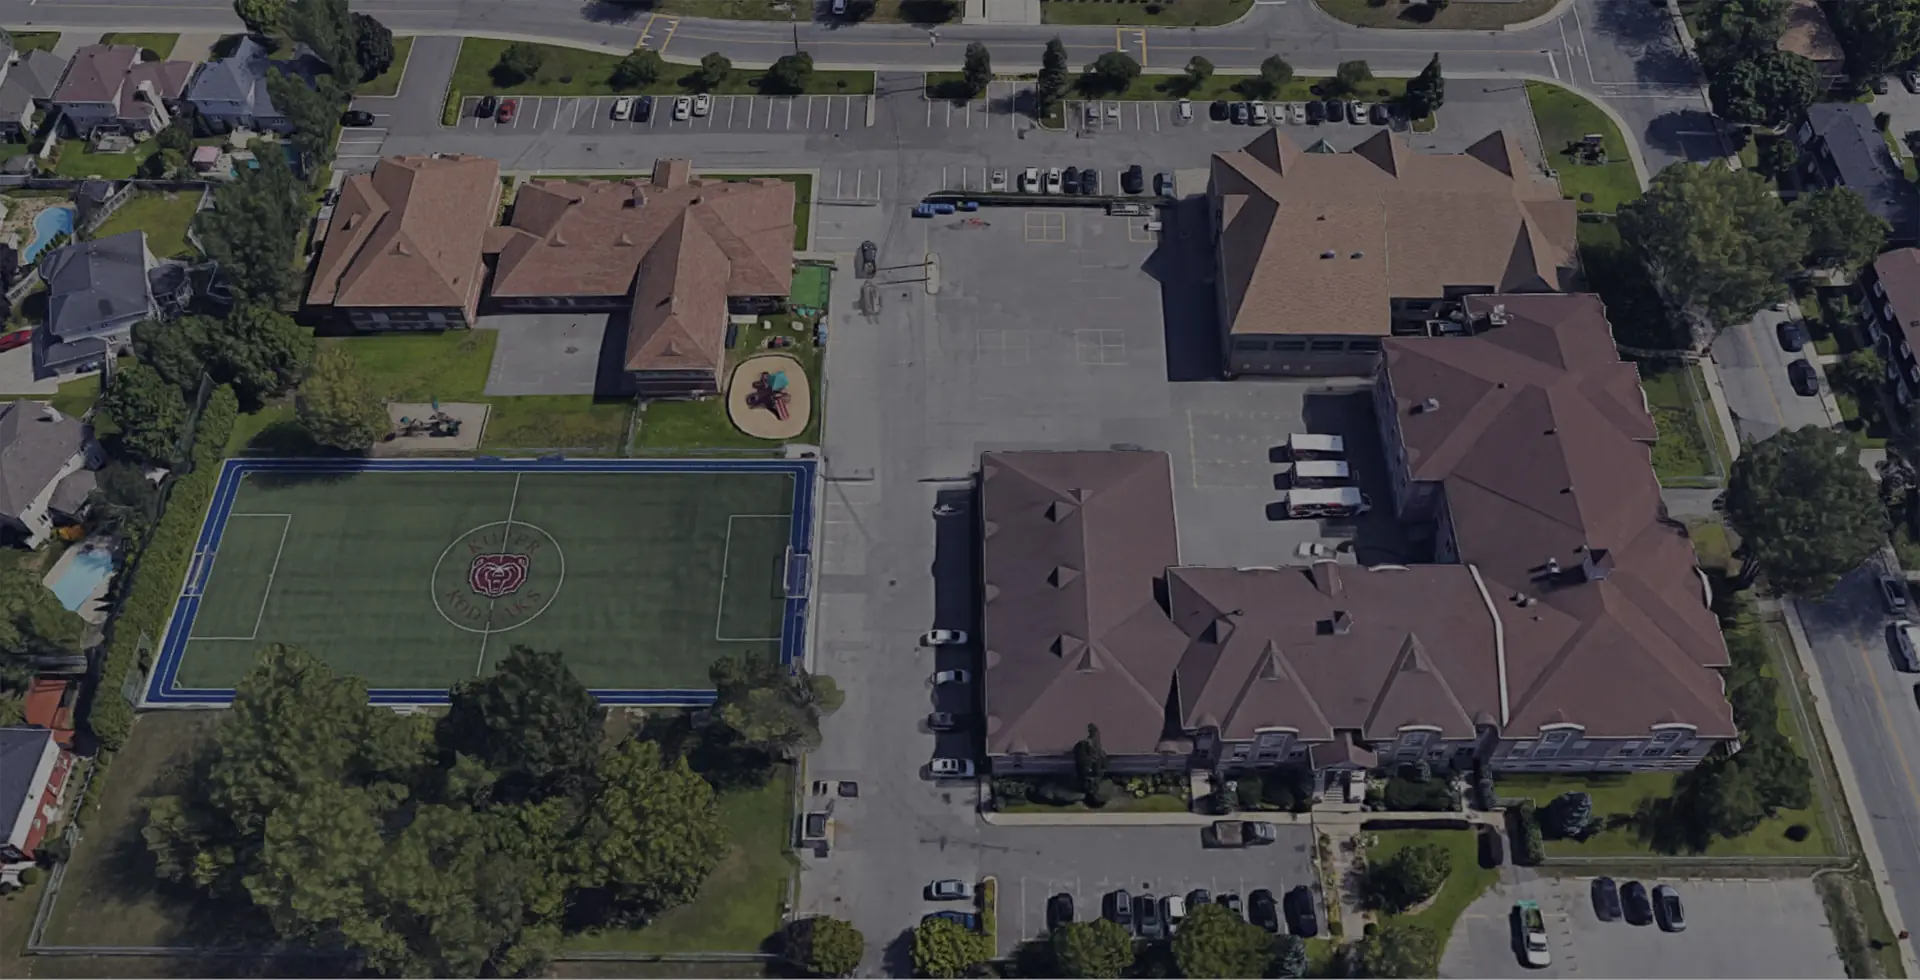 Kuper Academy - Campus Aerial View